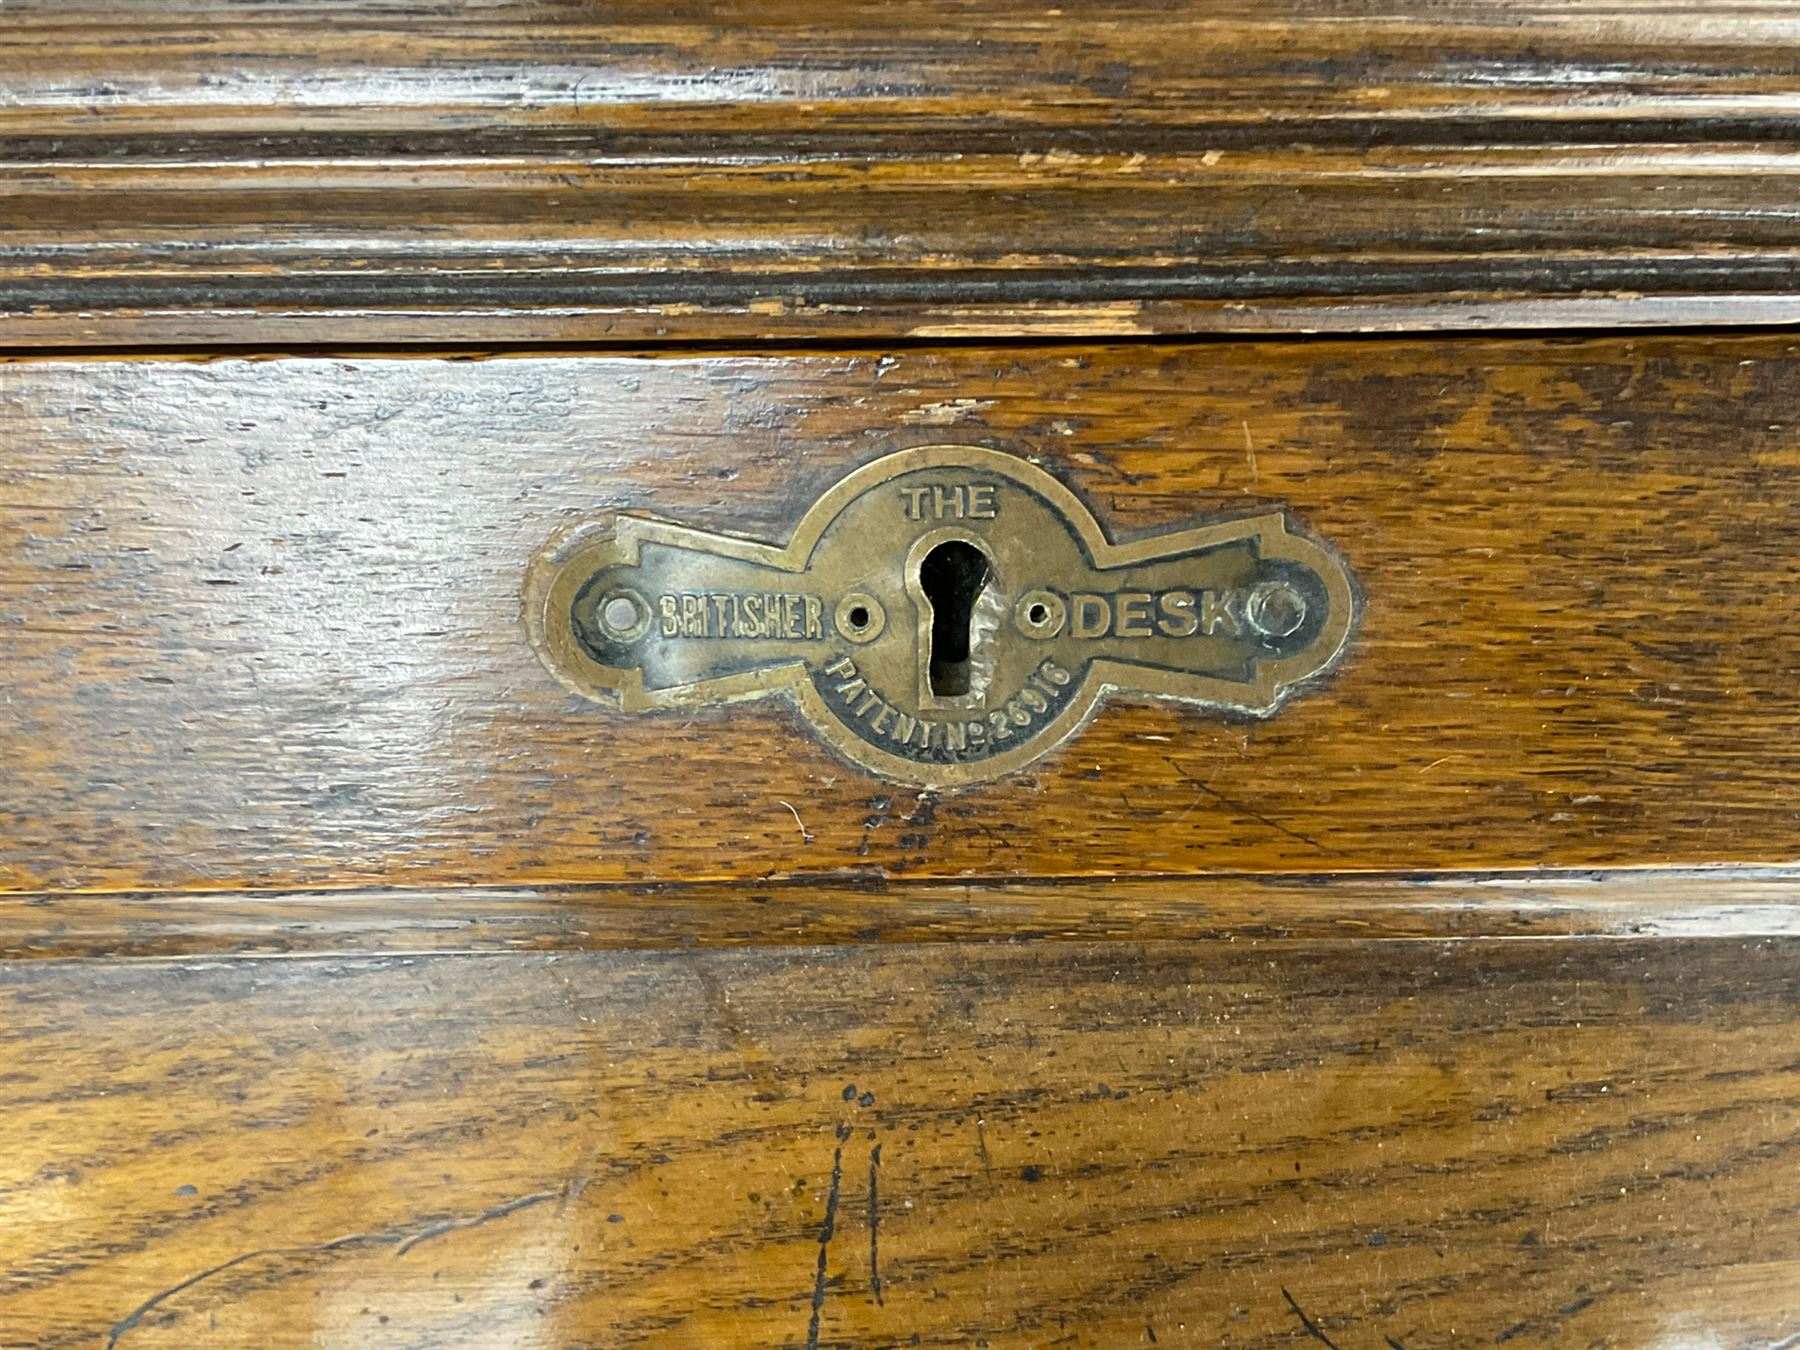 The Britisher Desk - early 20th century oak bureau cabinet - Image 3 of 4